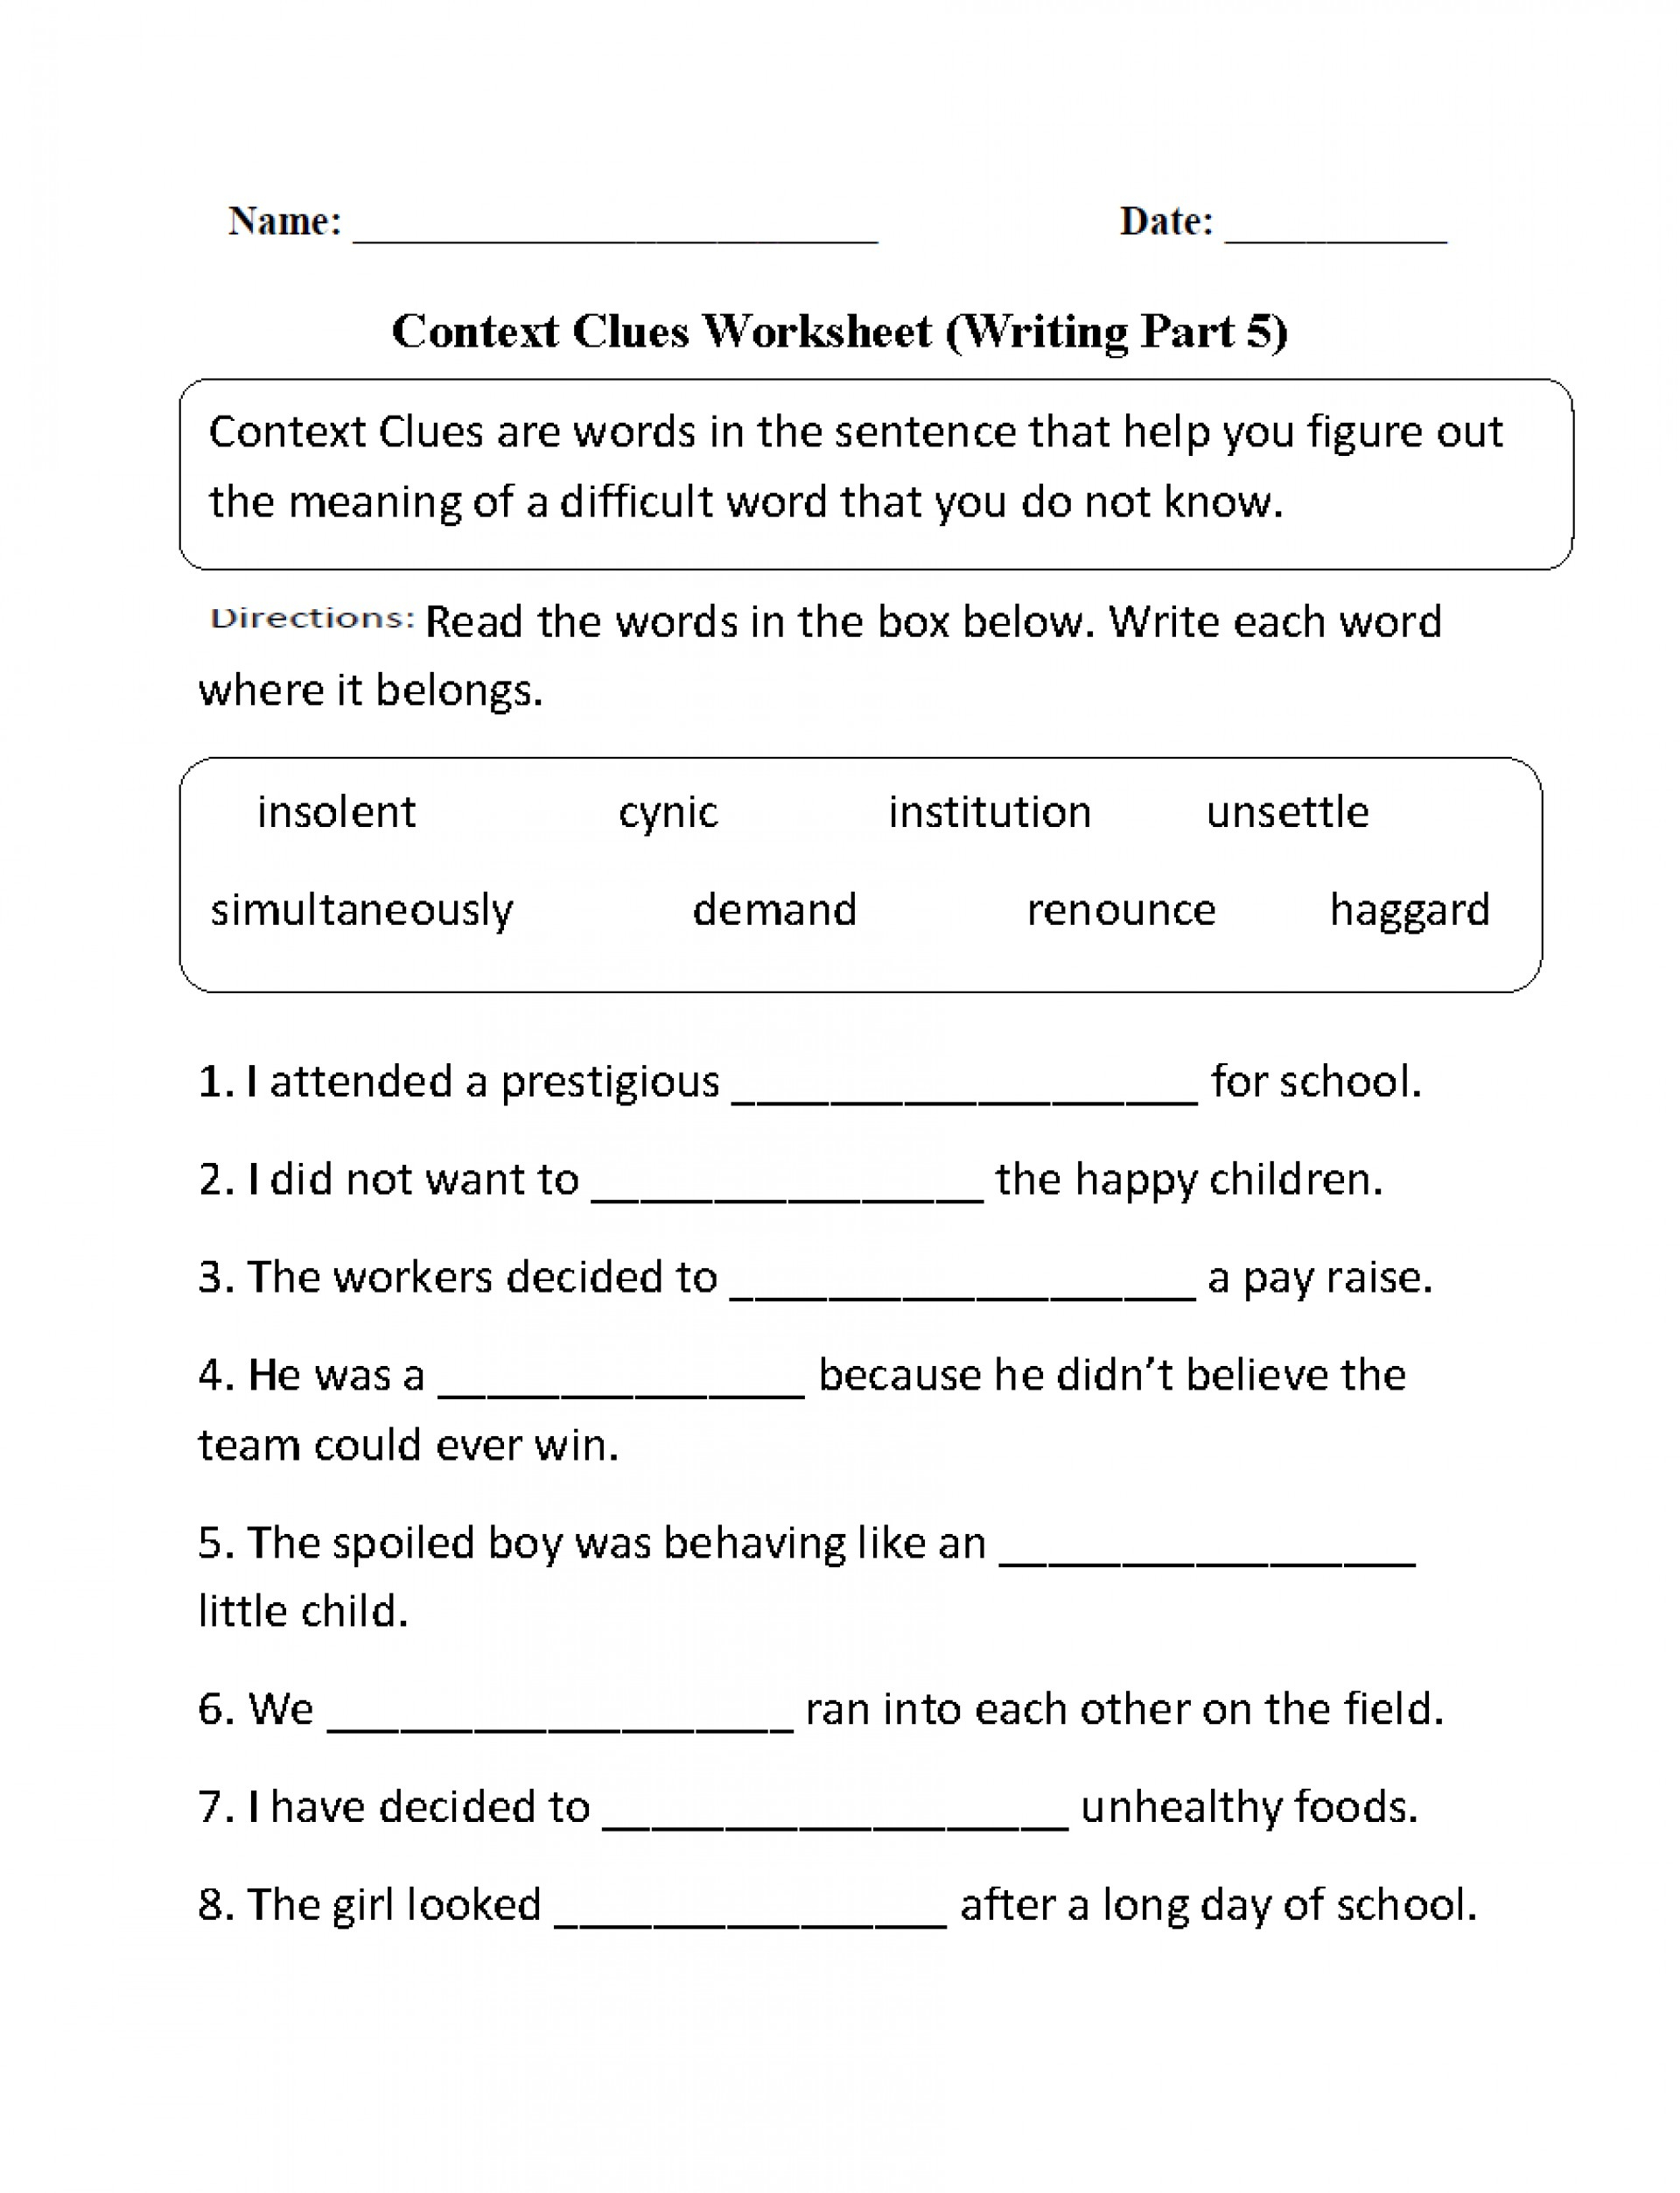 multiple-meaning-words-in-sentences-worksheets-uncategorized-resume-examples